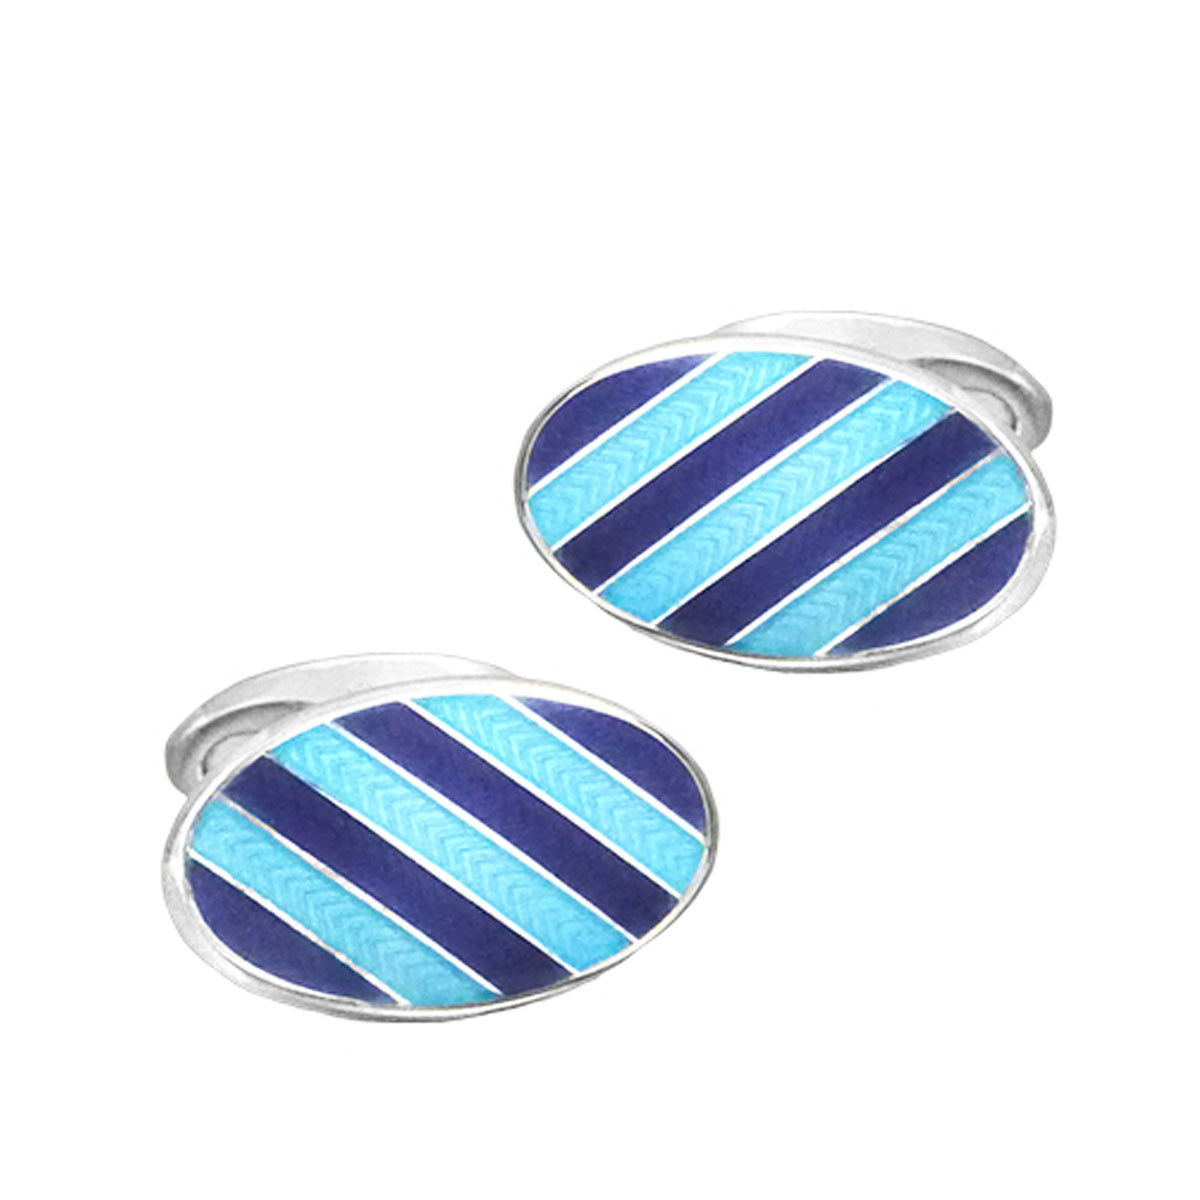 Blue striped silver and vitreous enamel cufflinks